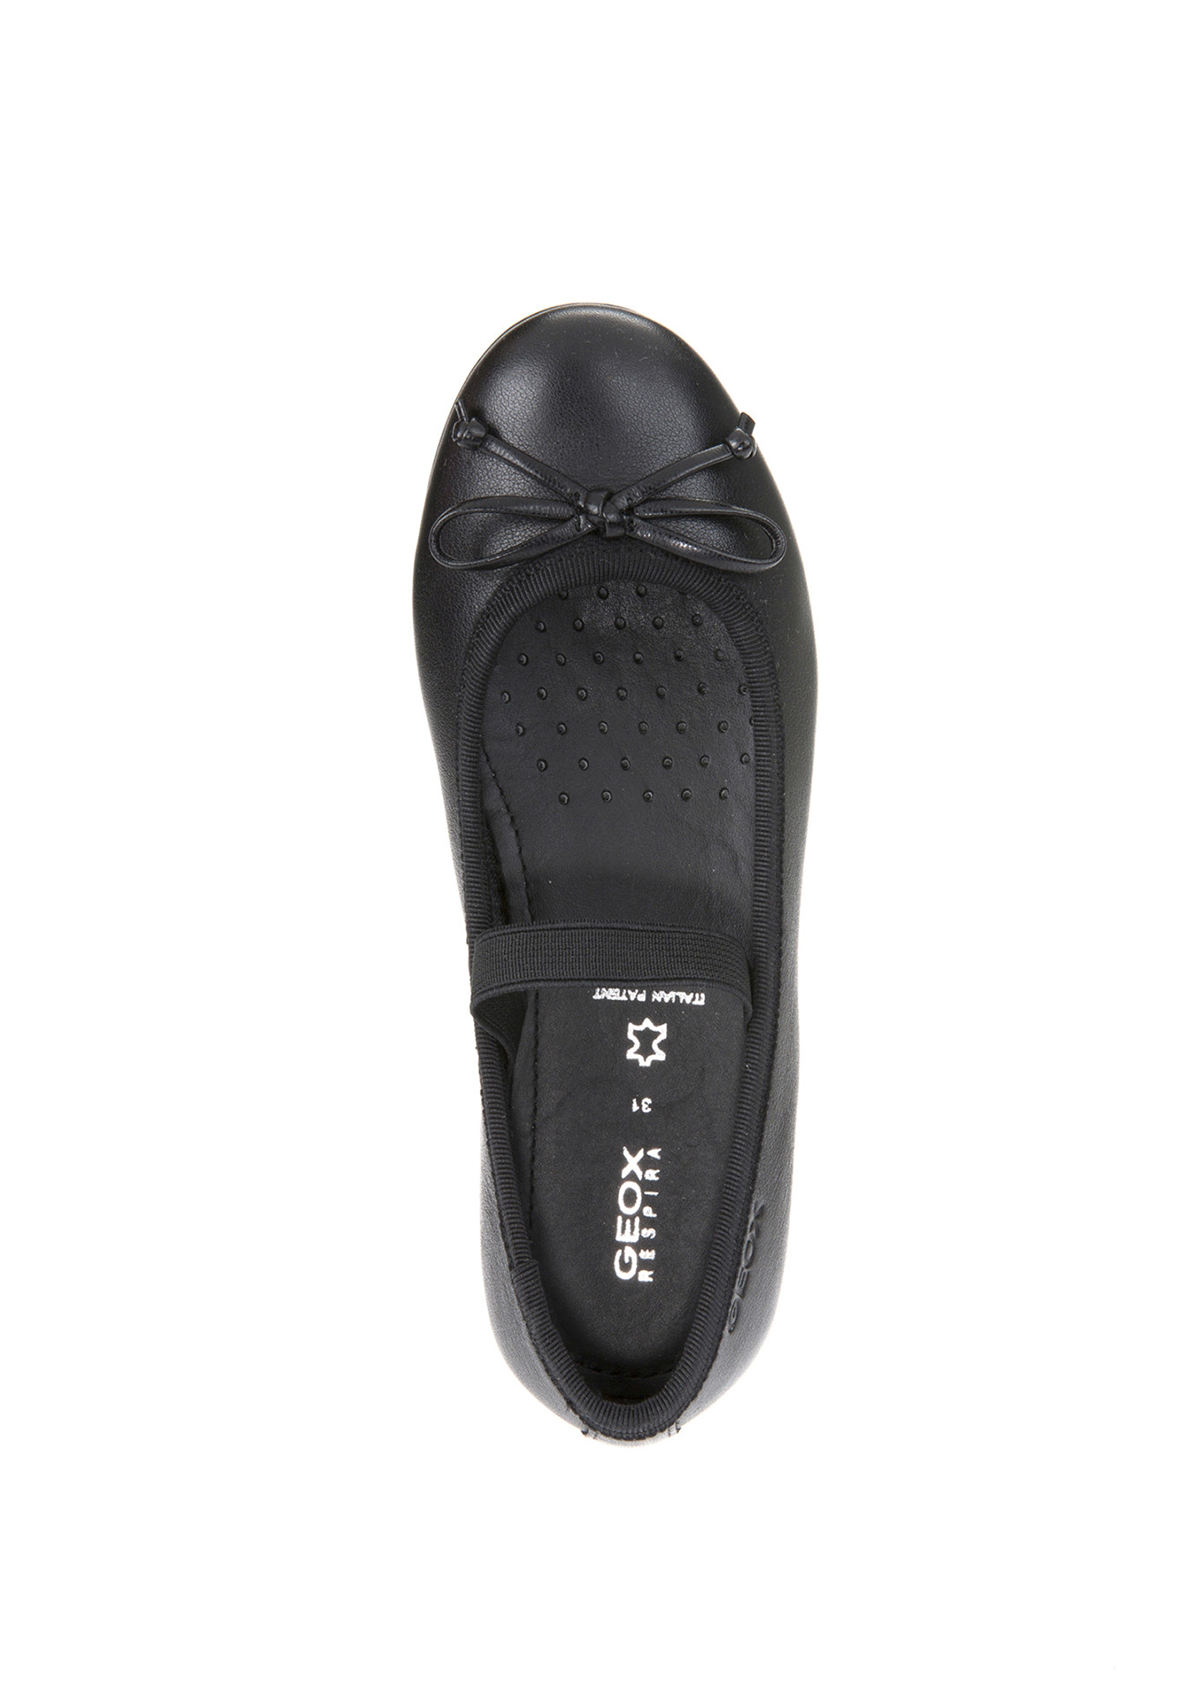 Geox Girls School Shoes PLIE Black Leather